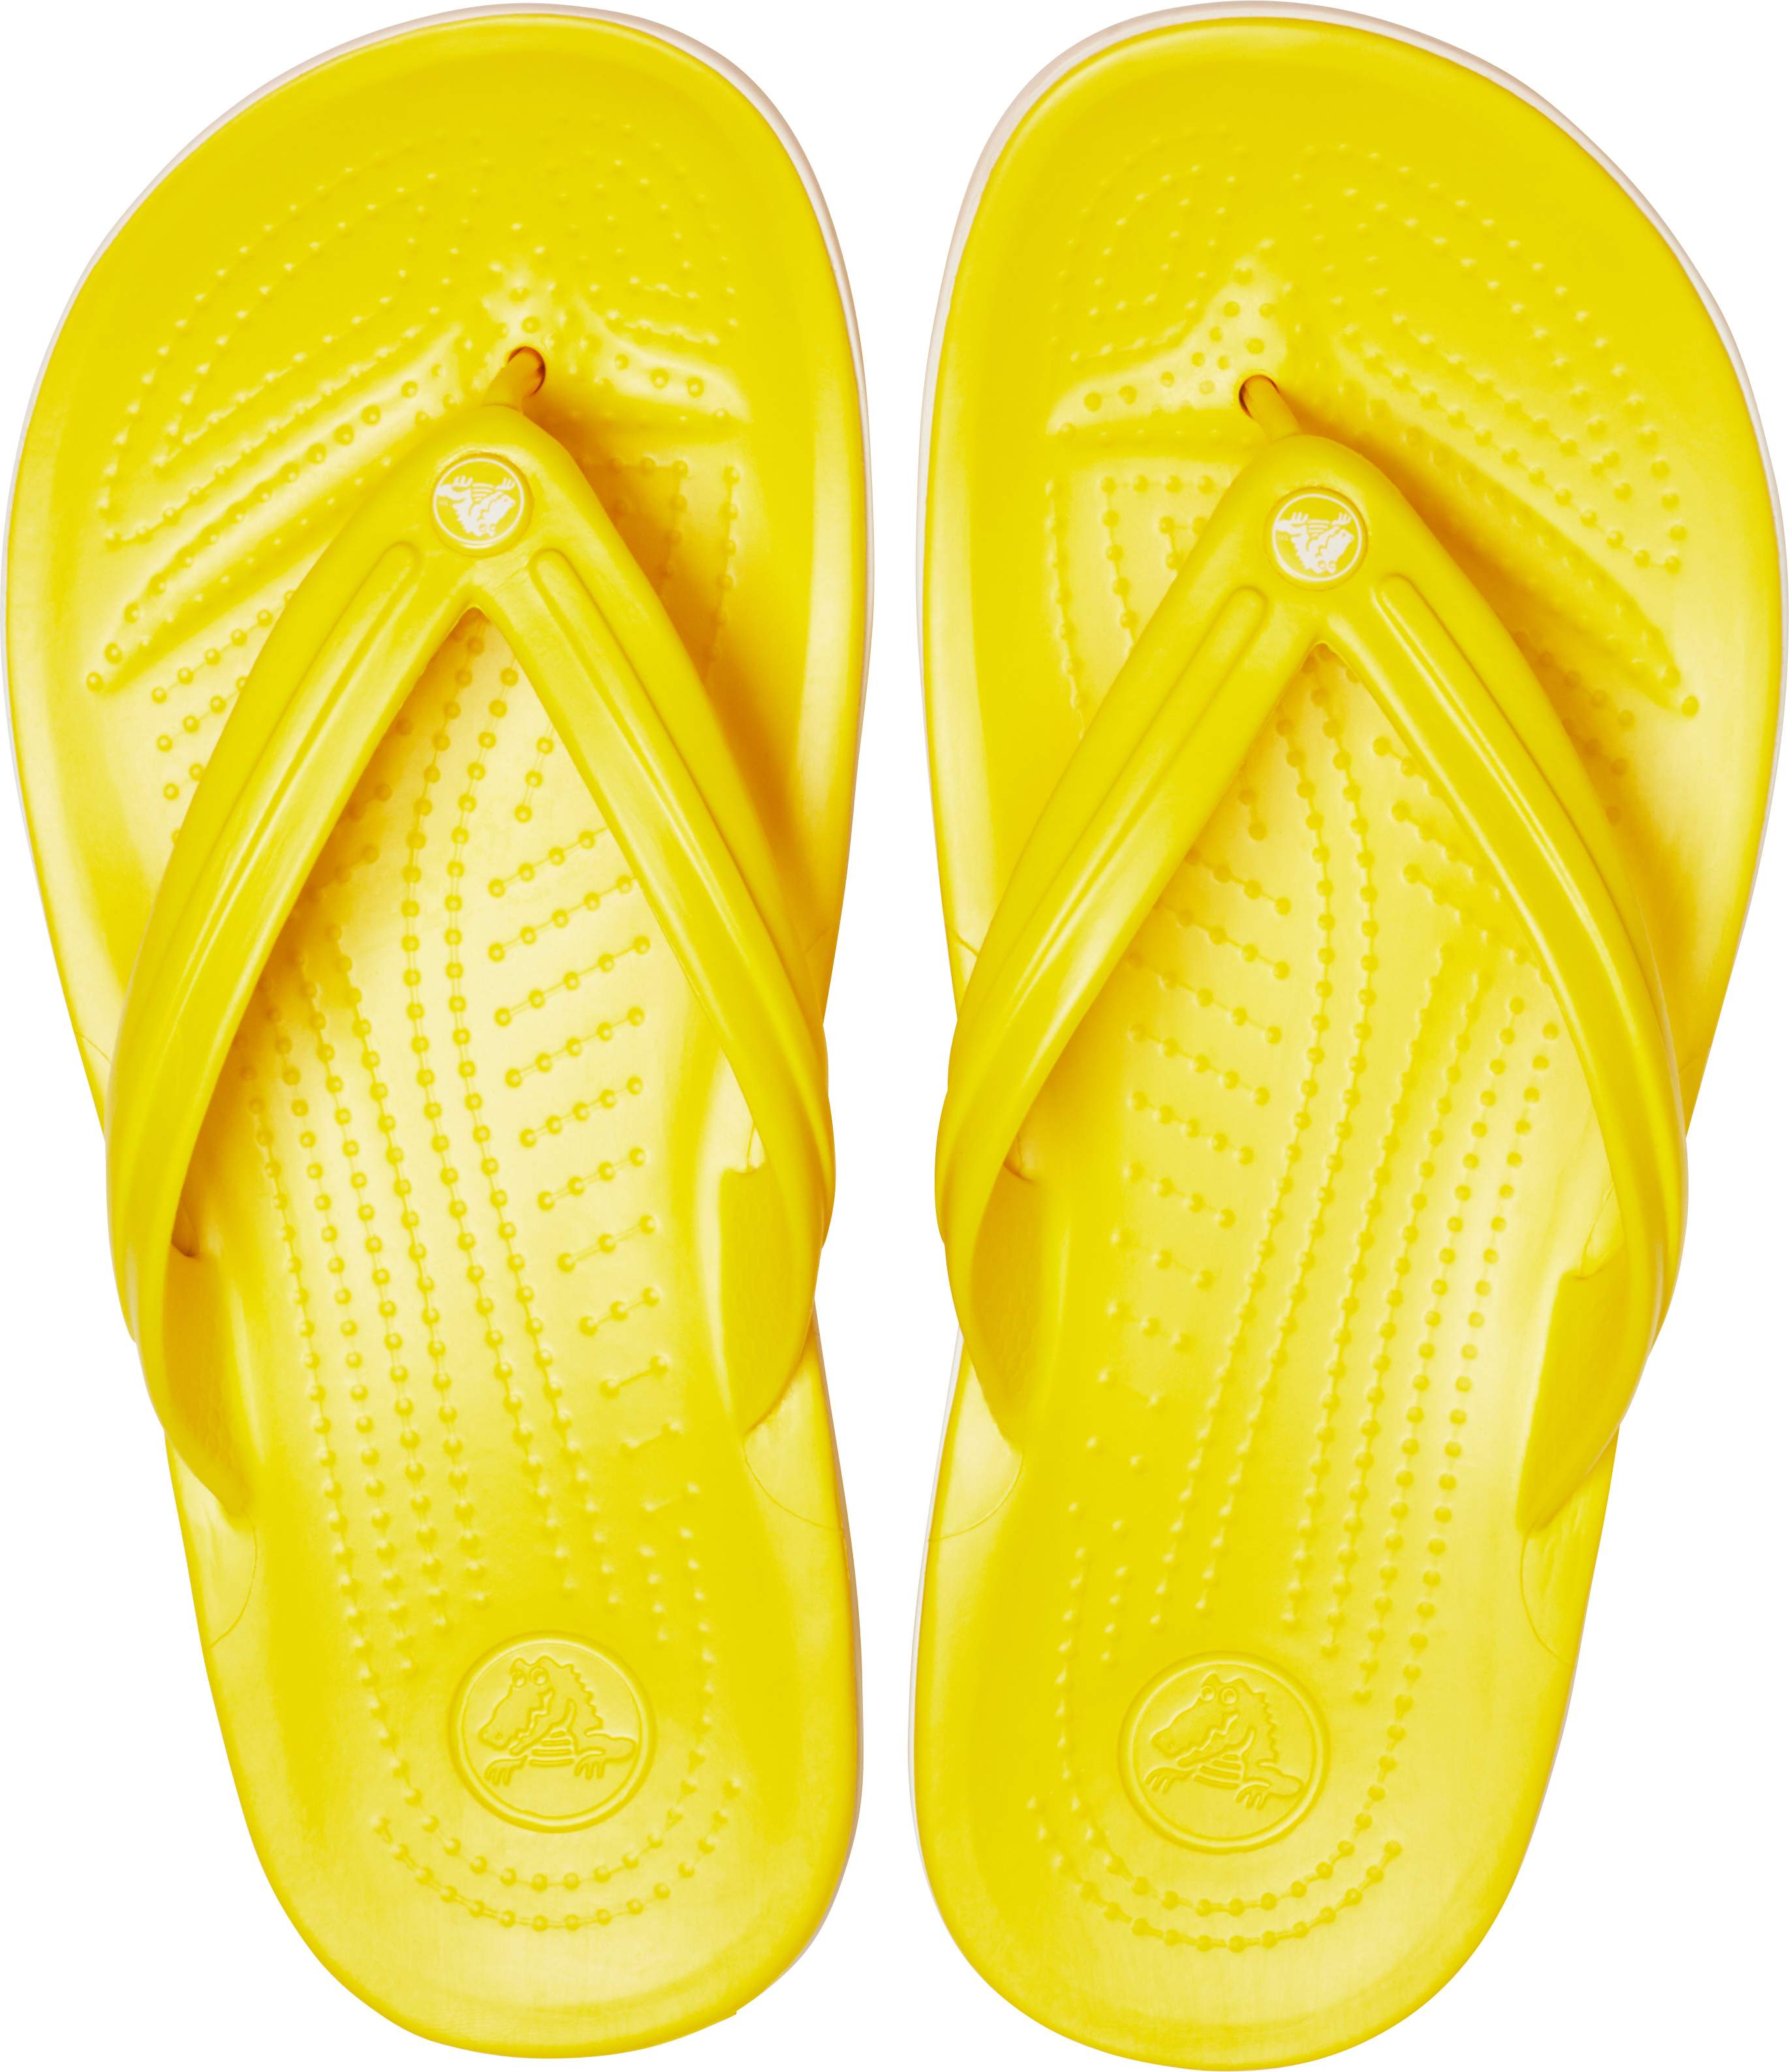 crocs crocband flip flops for men